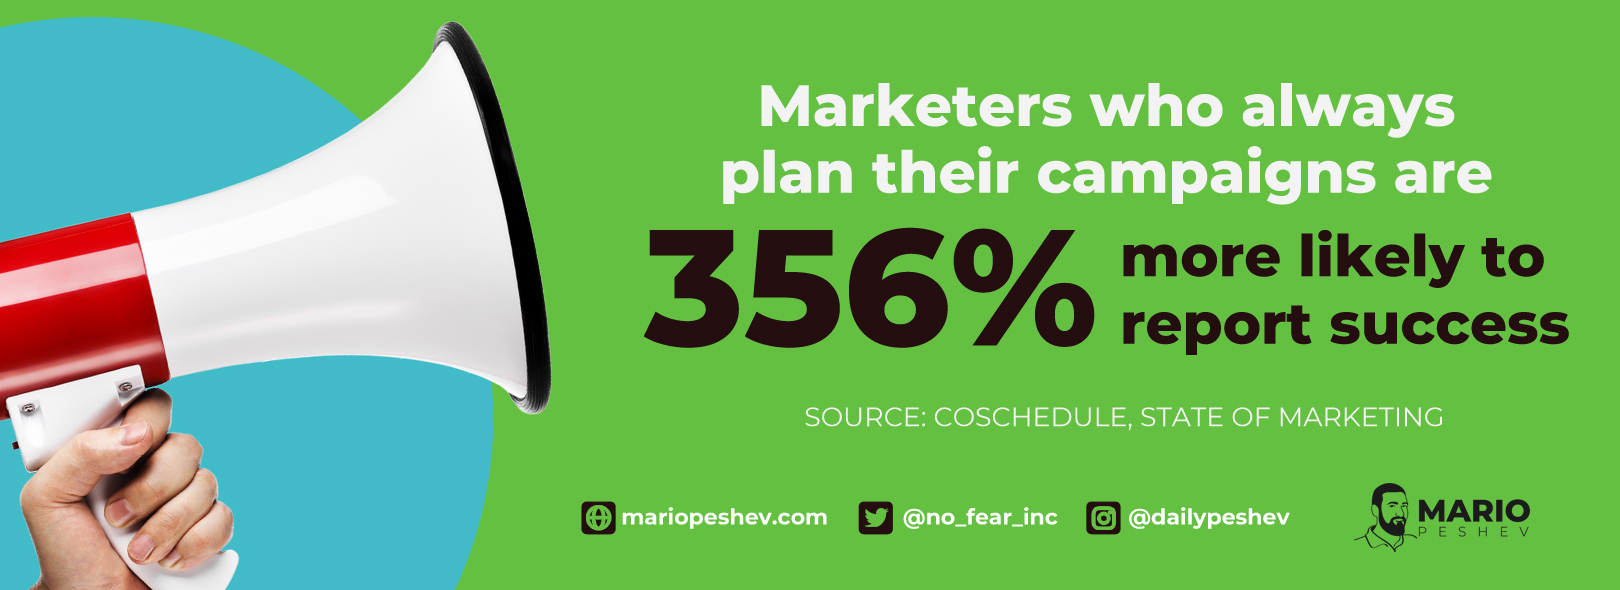 statistics on marketing campaigns